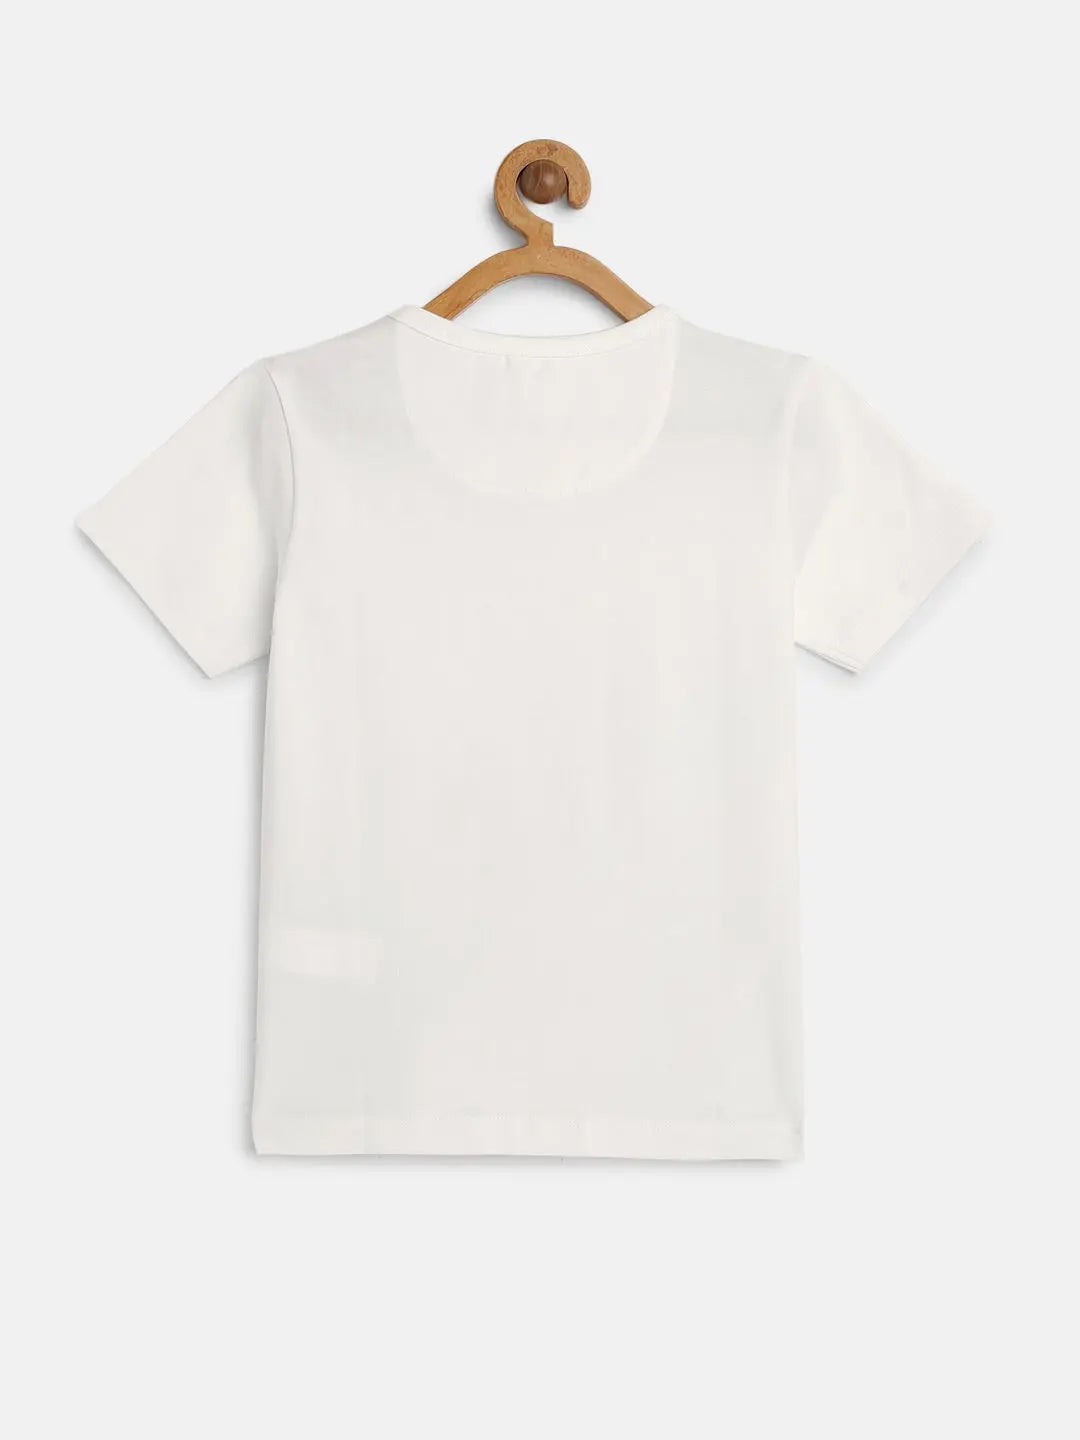 Kids Jungle Print Half Sleeves Cotton T-shirt freeshipping - Ladore